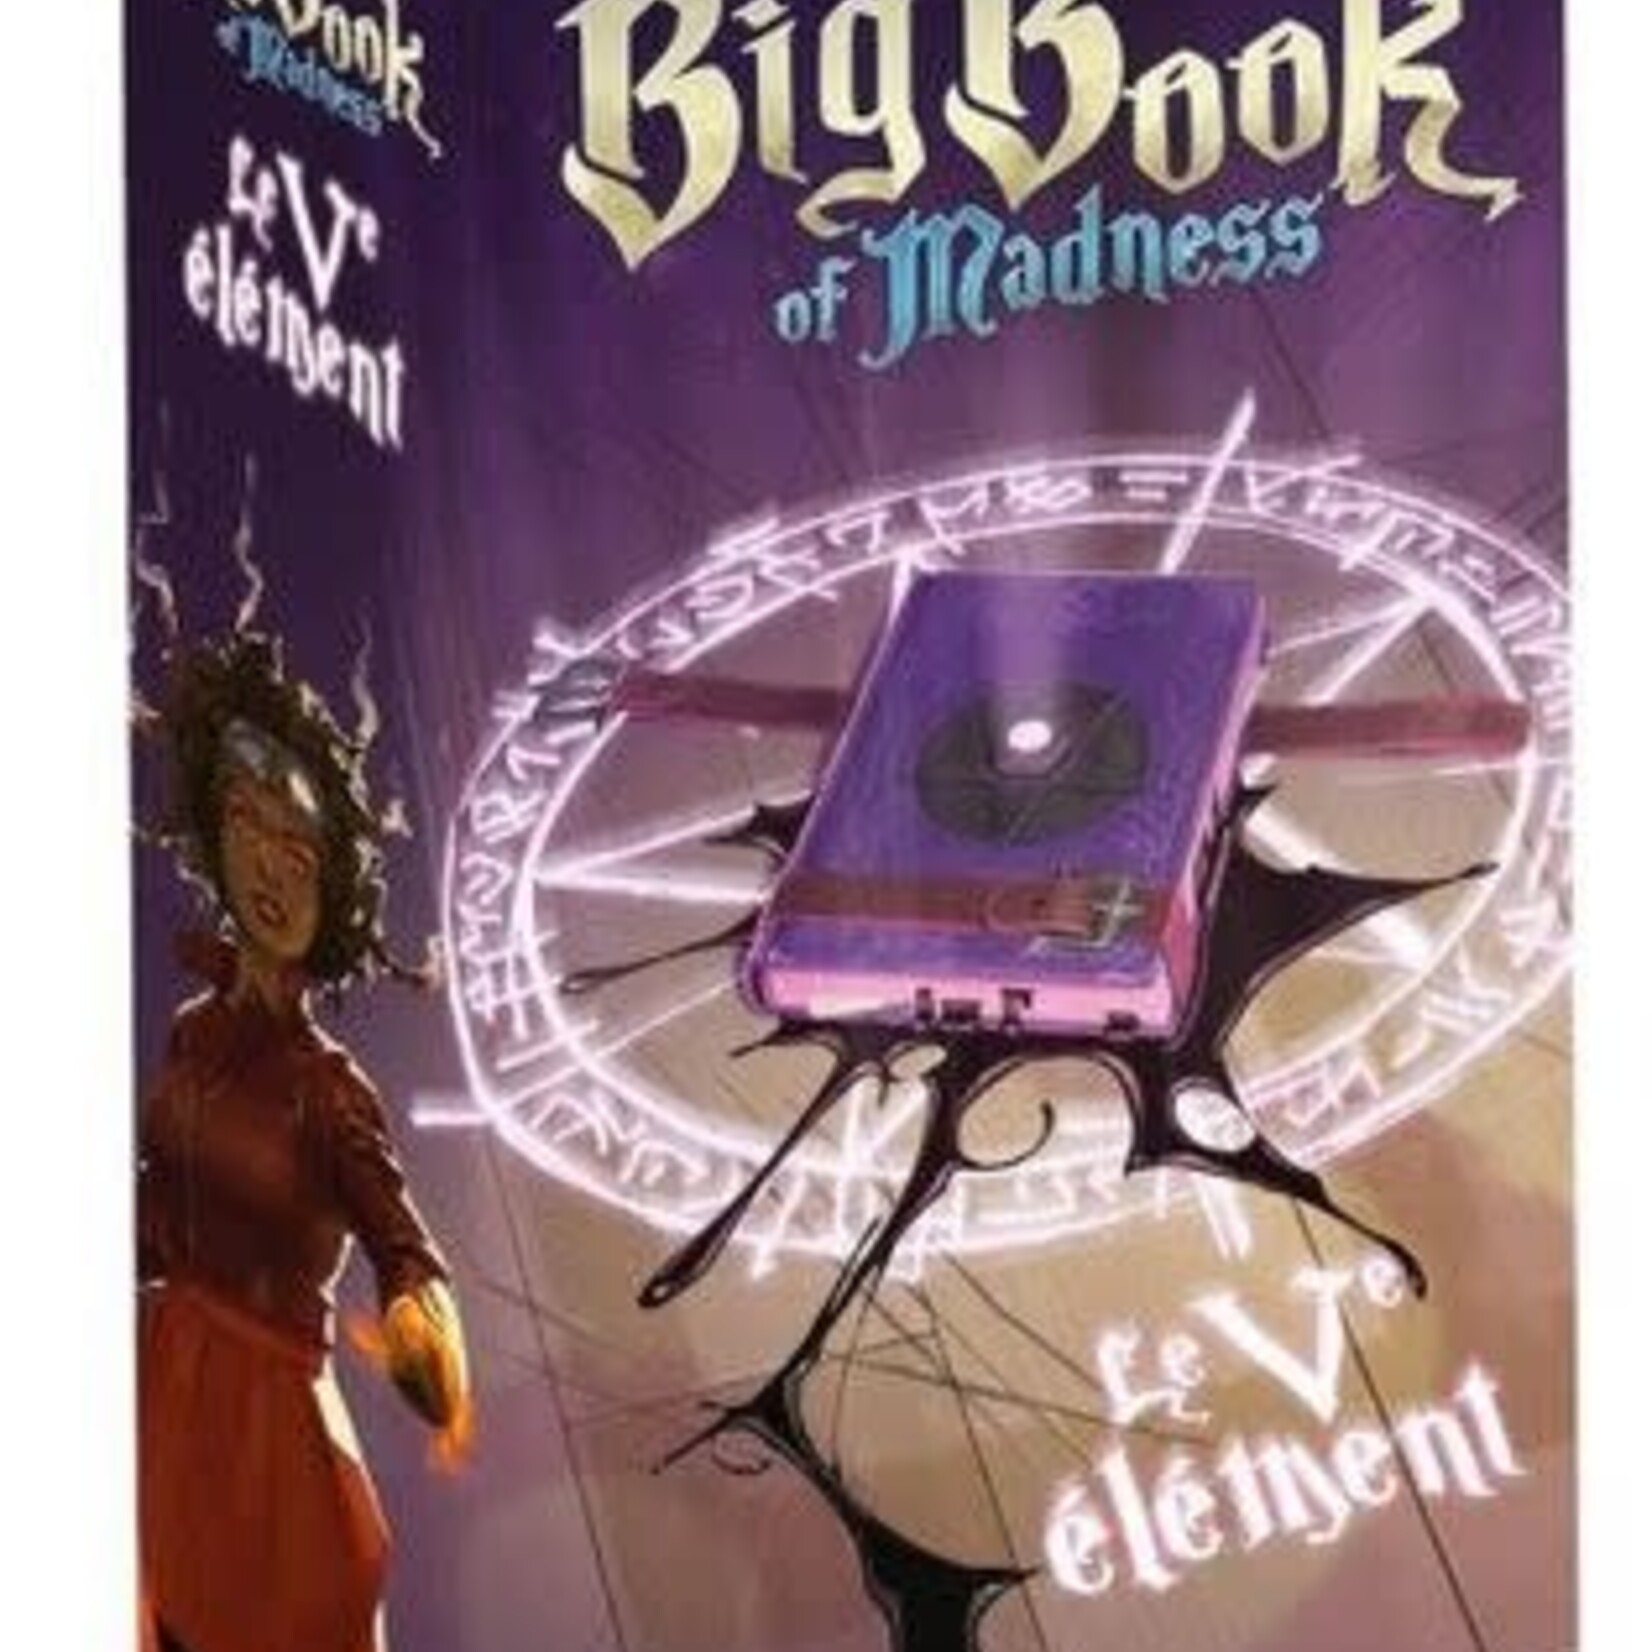 Iello Games The Big Book of Madness: The Vth Element